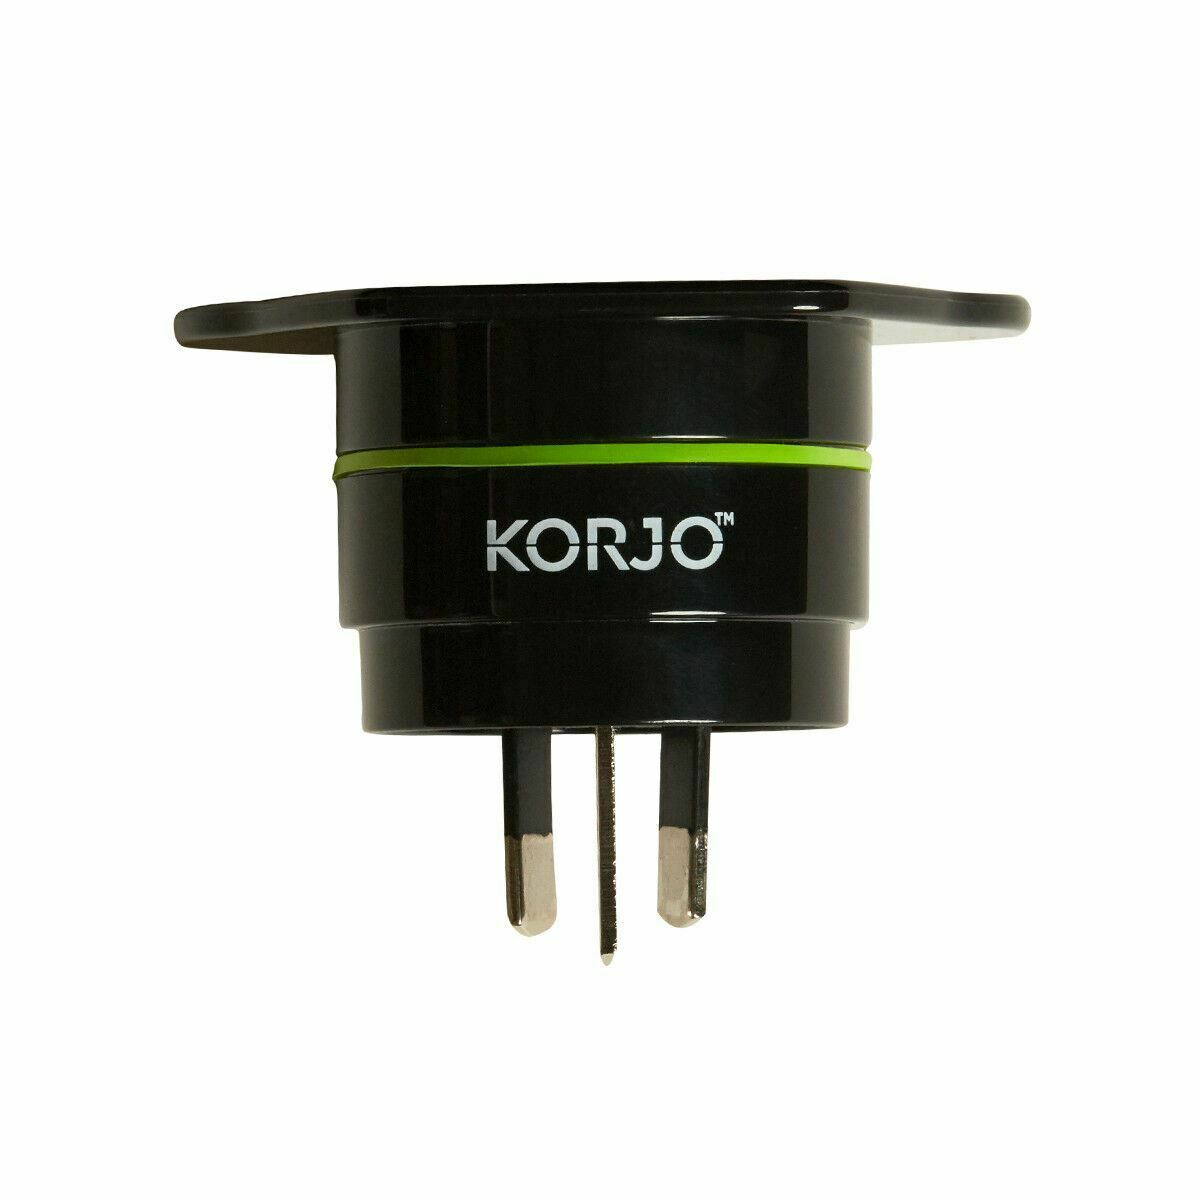 KORJO Reverse Plug Adaptor from South Africa & India to AUS NZ